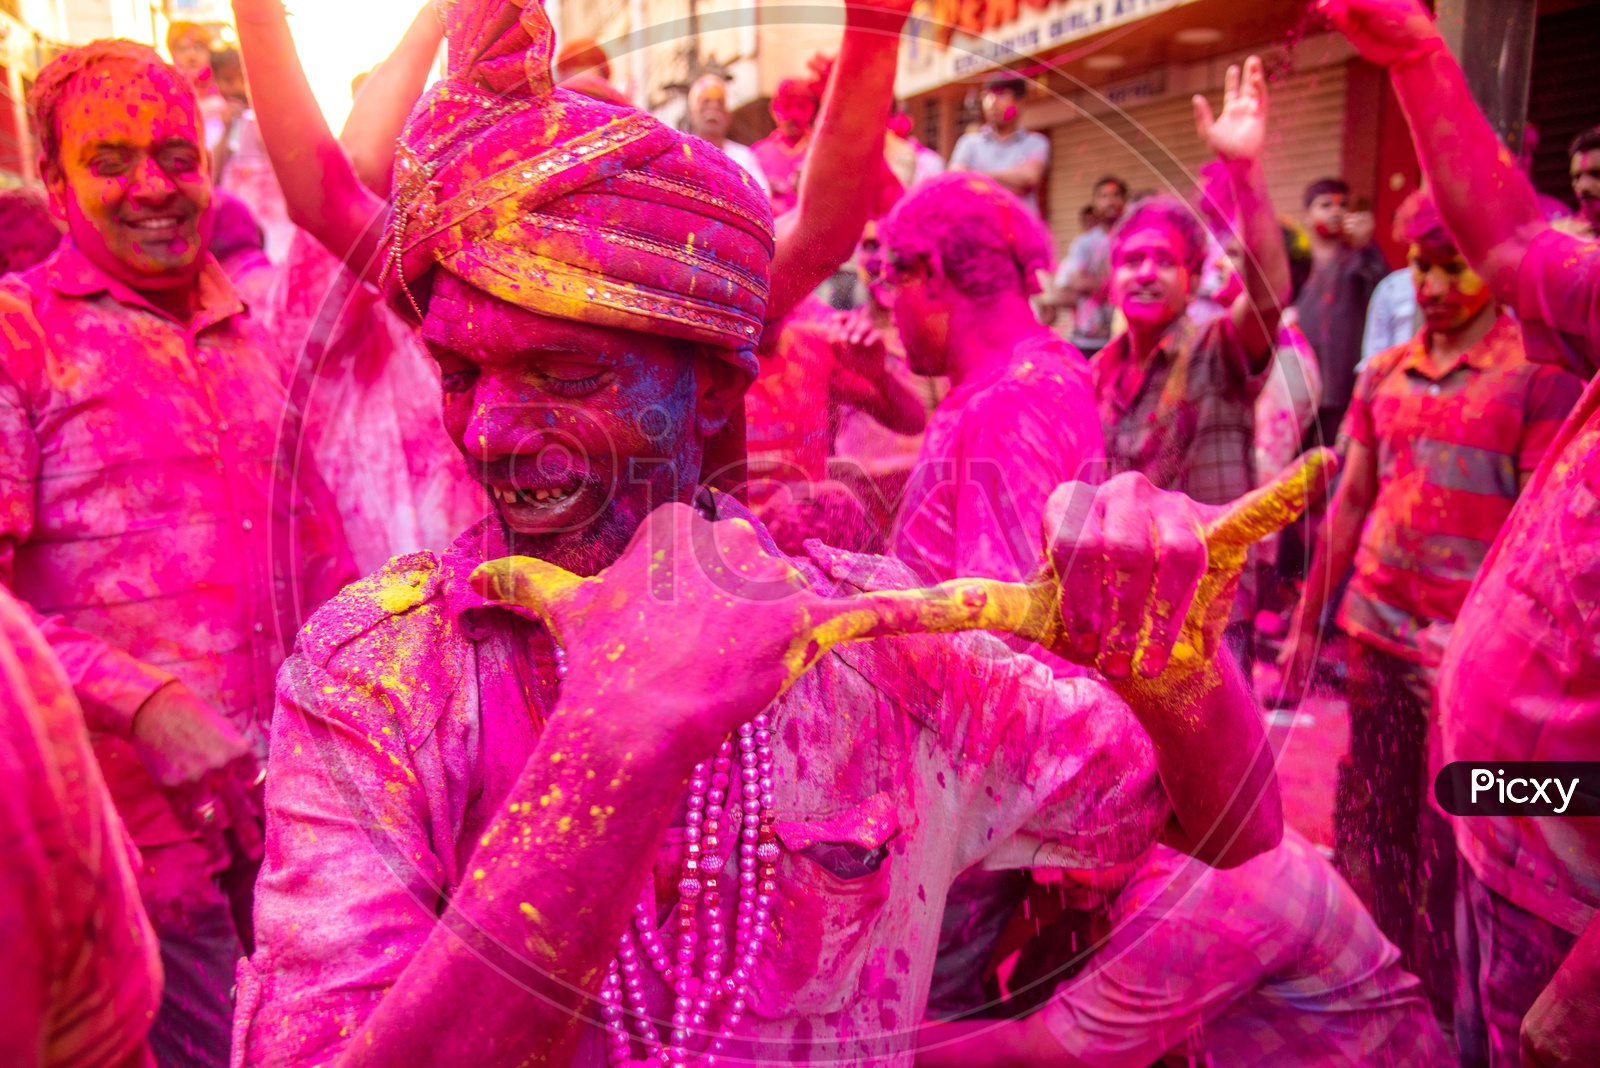 Marwari or Marwadi men celebrate Holi in Hyderabad on 21st March 2019